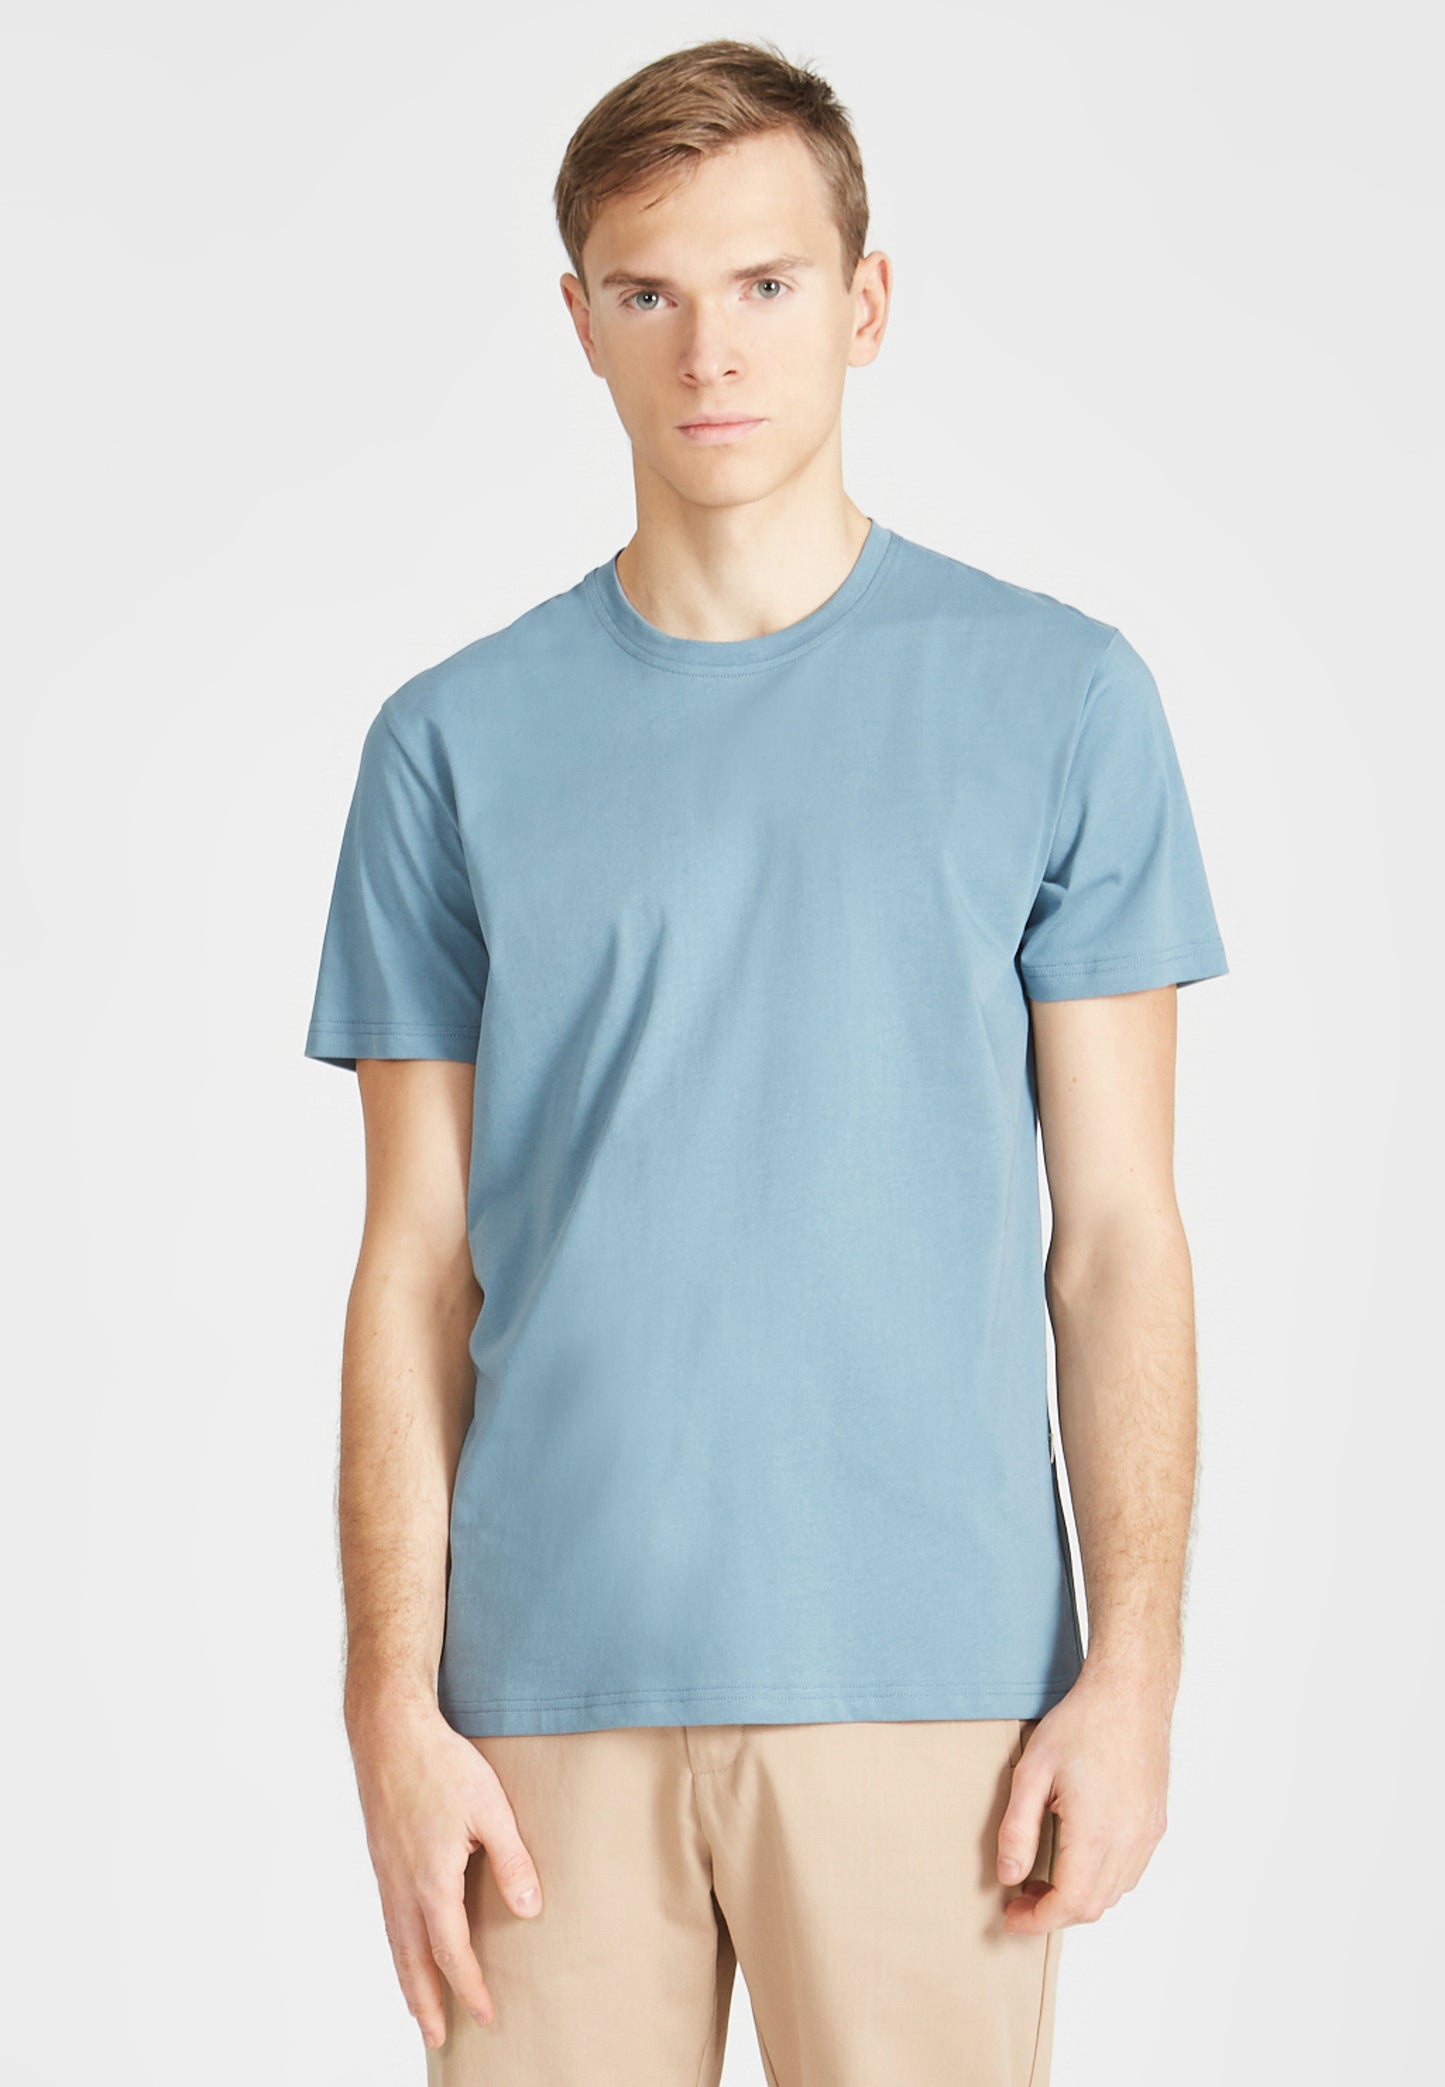 t-shirt colby, arctic blue, herren - givn